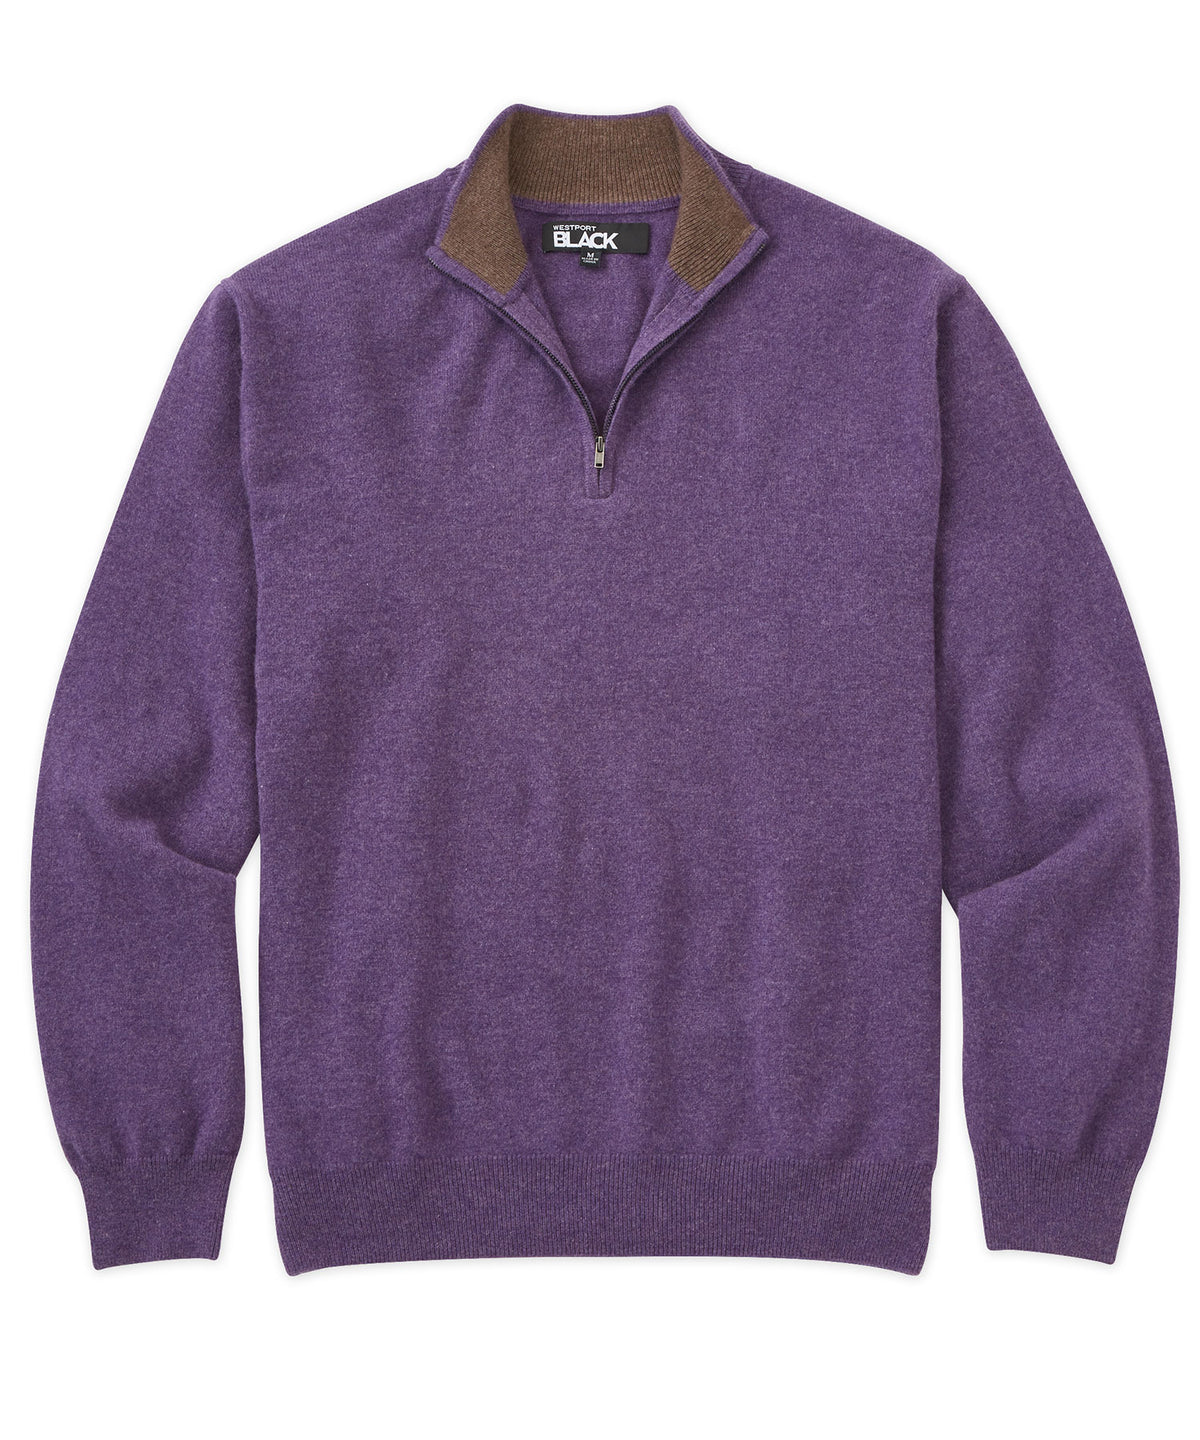 Westport Black Cashmere Quarter-Zip Sweater, Big & Tall